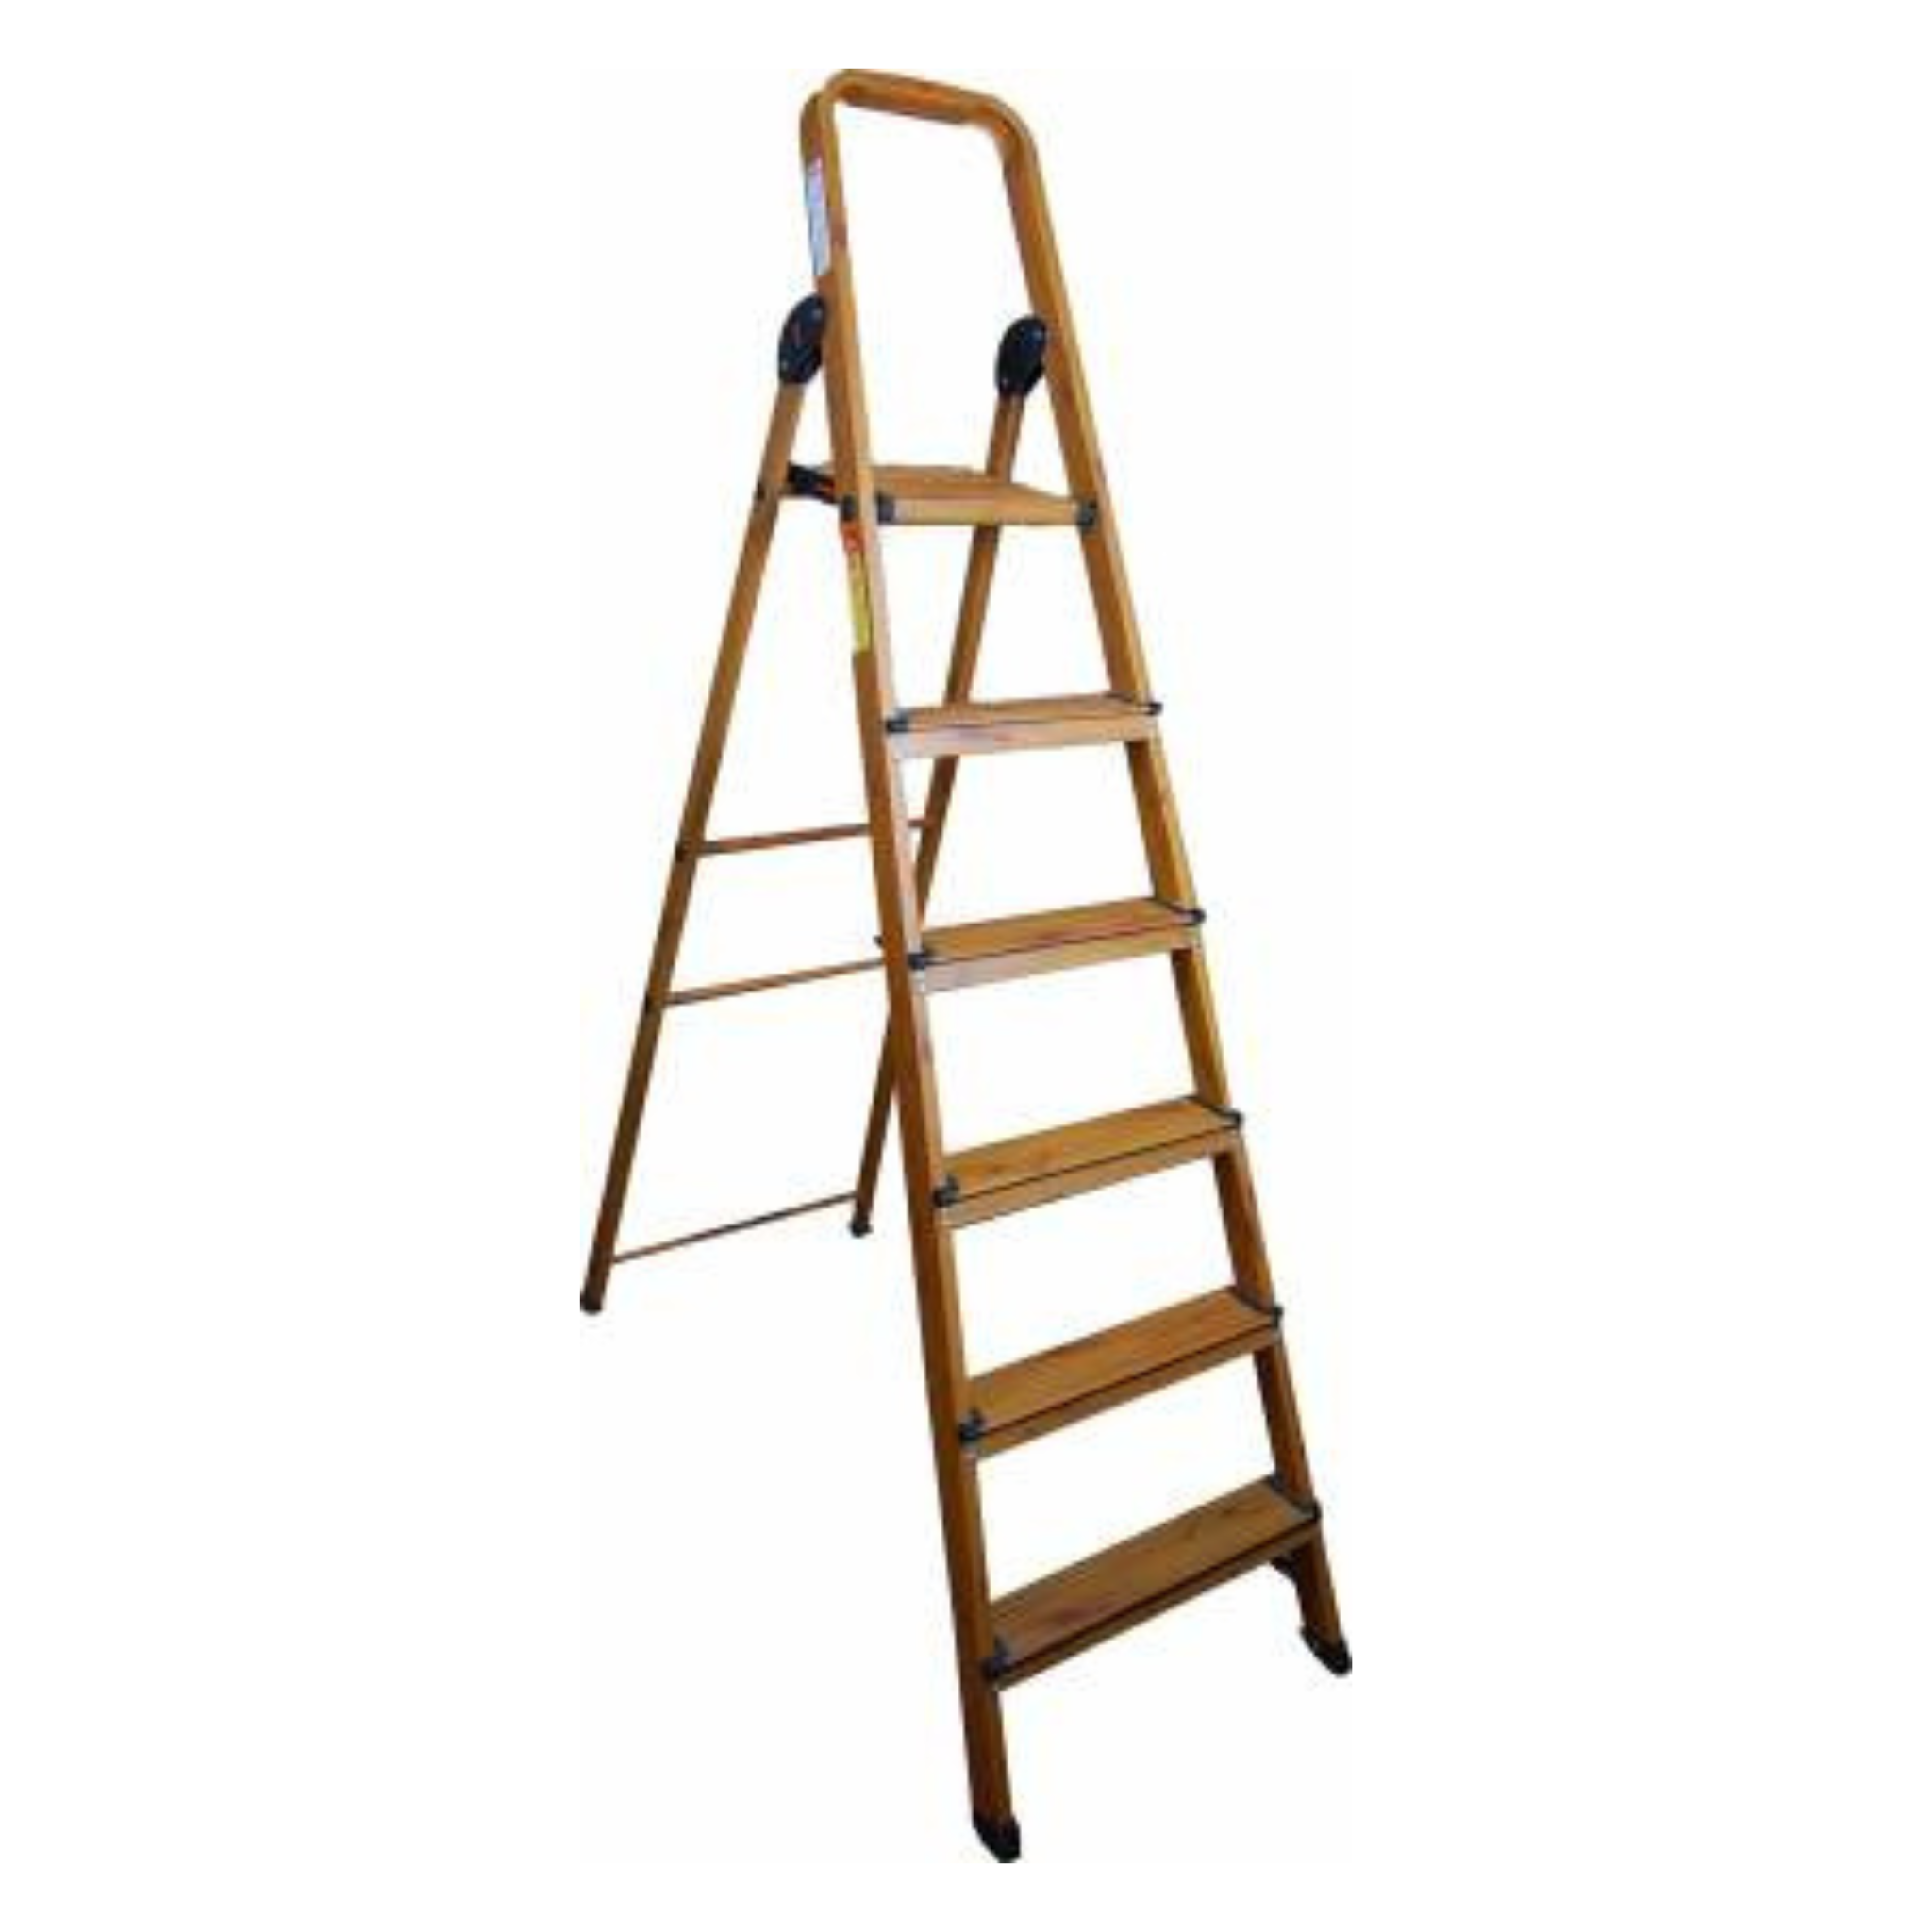 Prime Safe Step Wood-Finish Foldable Aluminum Ladder with Serrated Steps & Extra Strong Platform